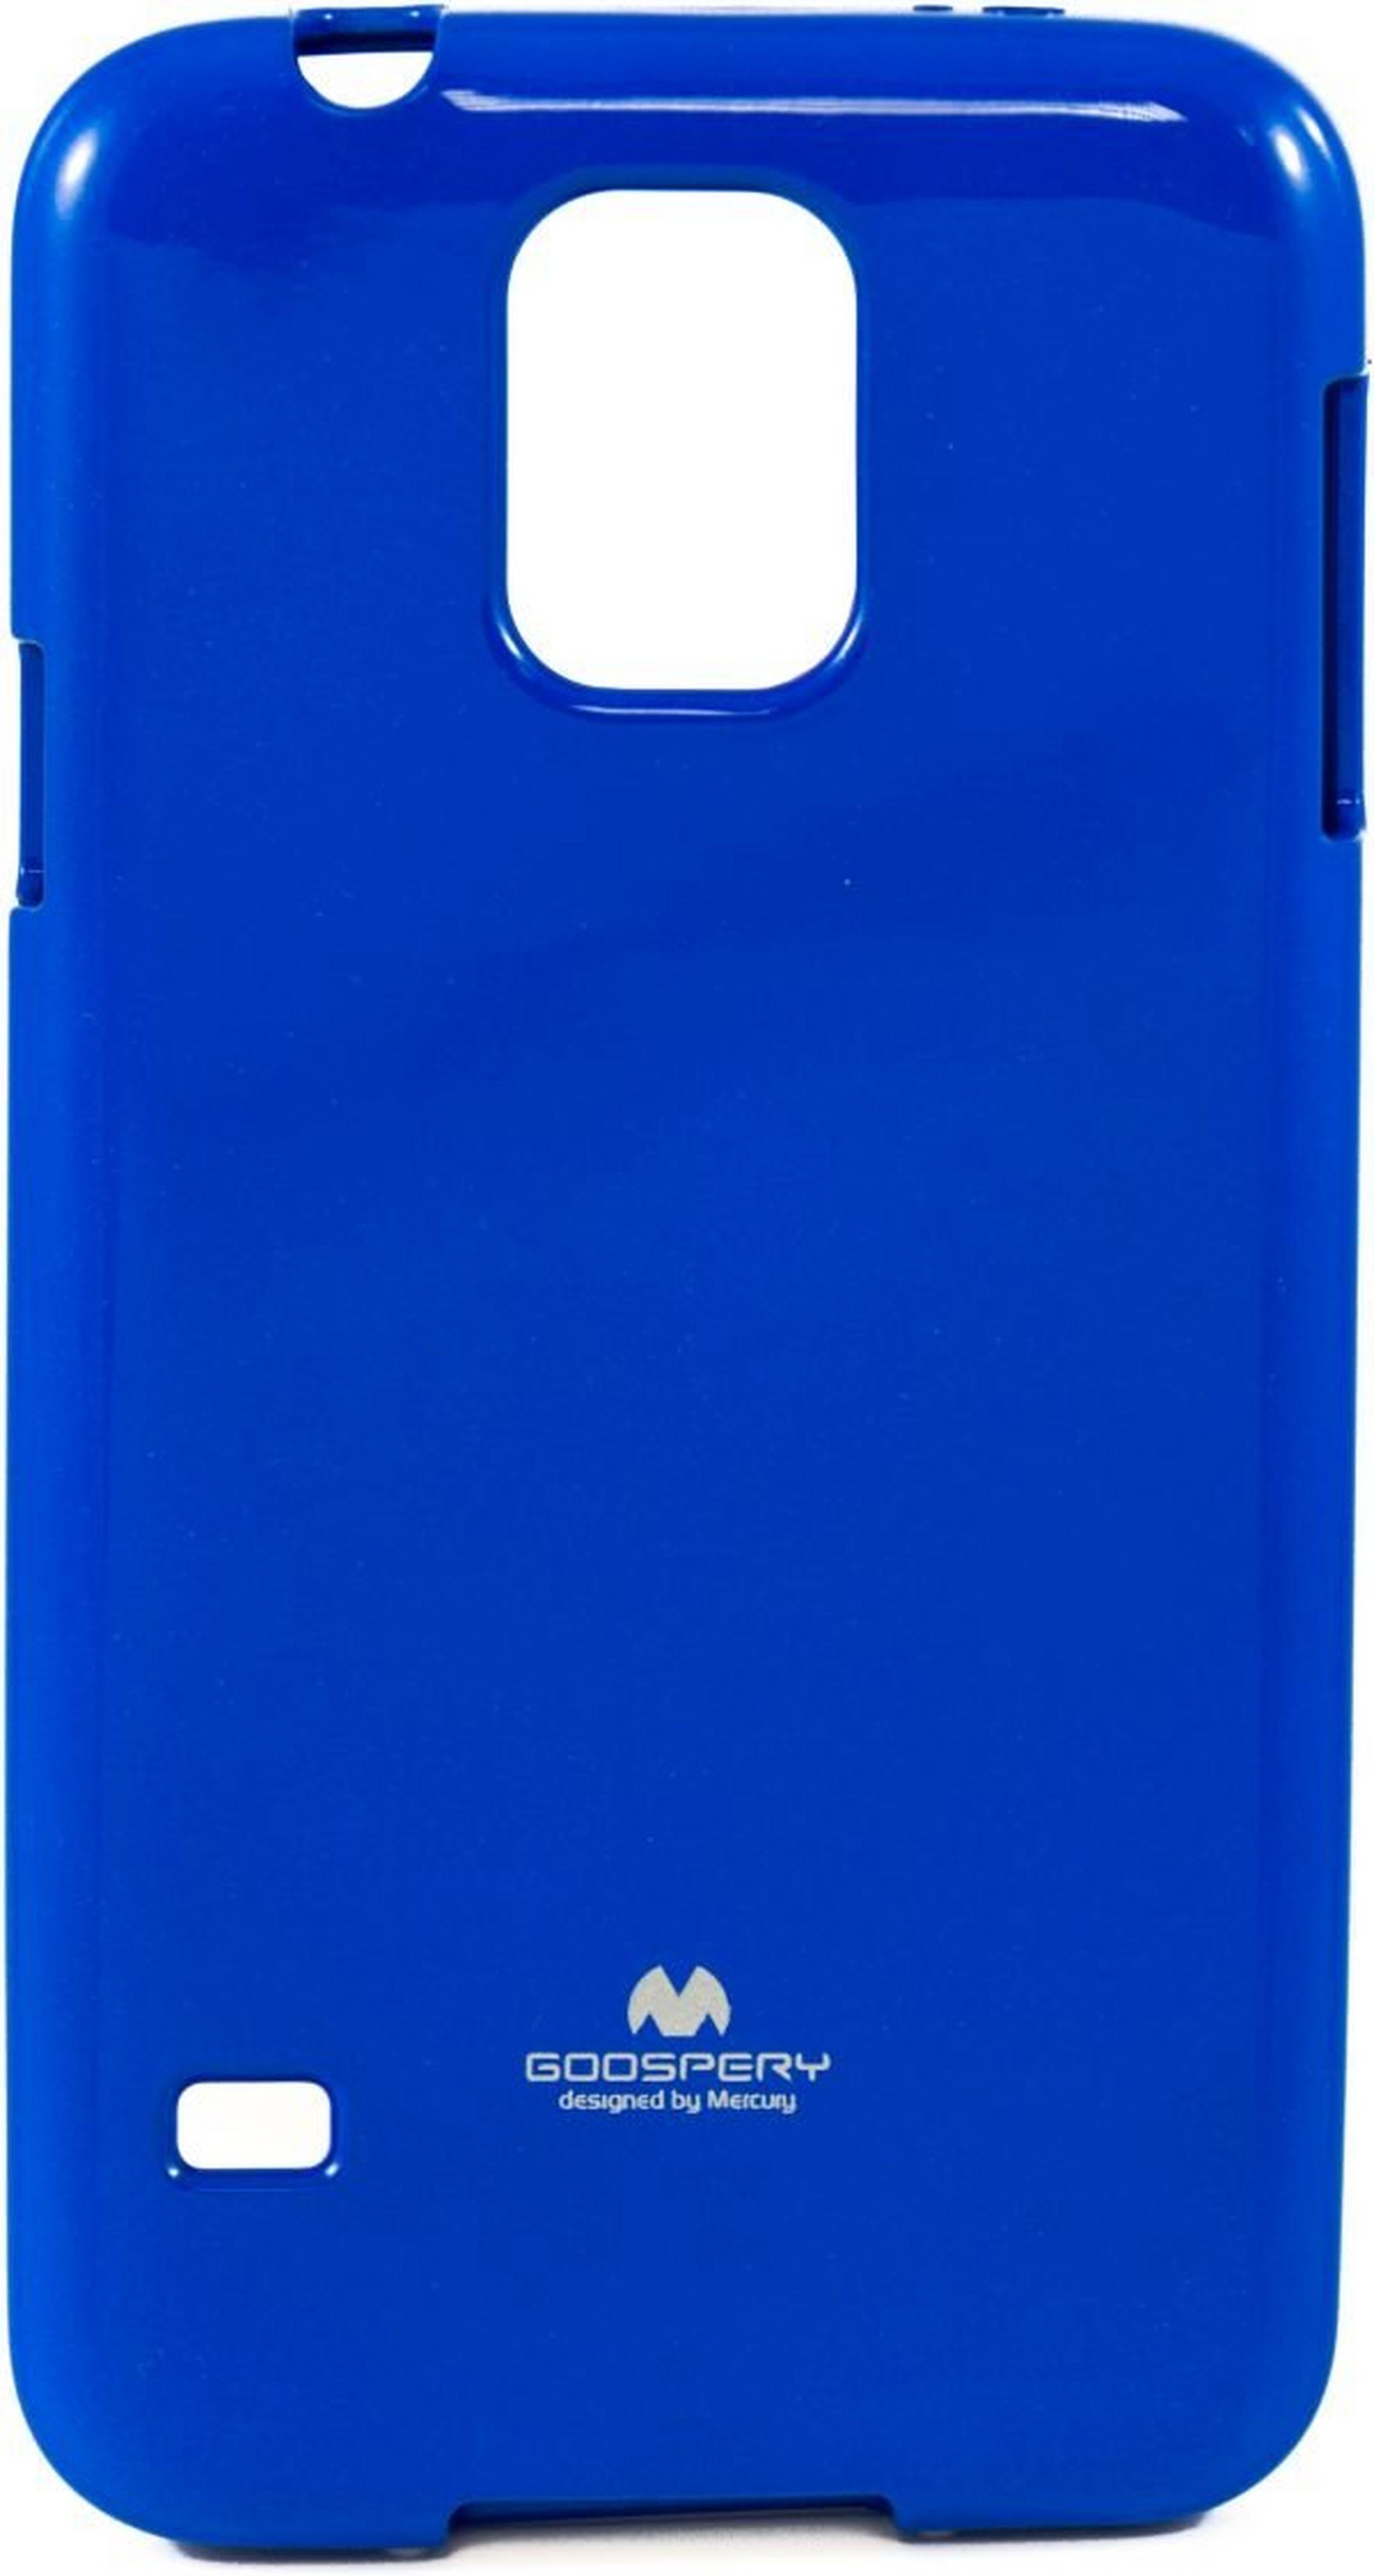 Goospery Jelly Case for Samsung Galaxy S5 - Blue